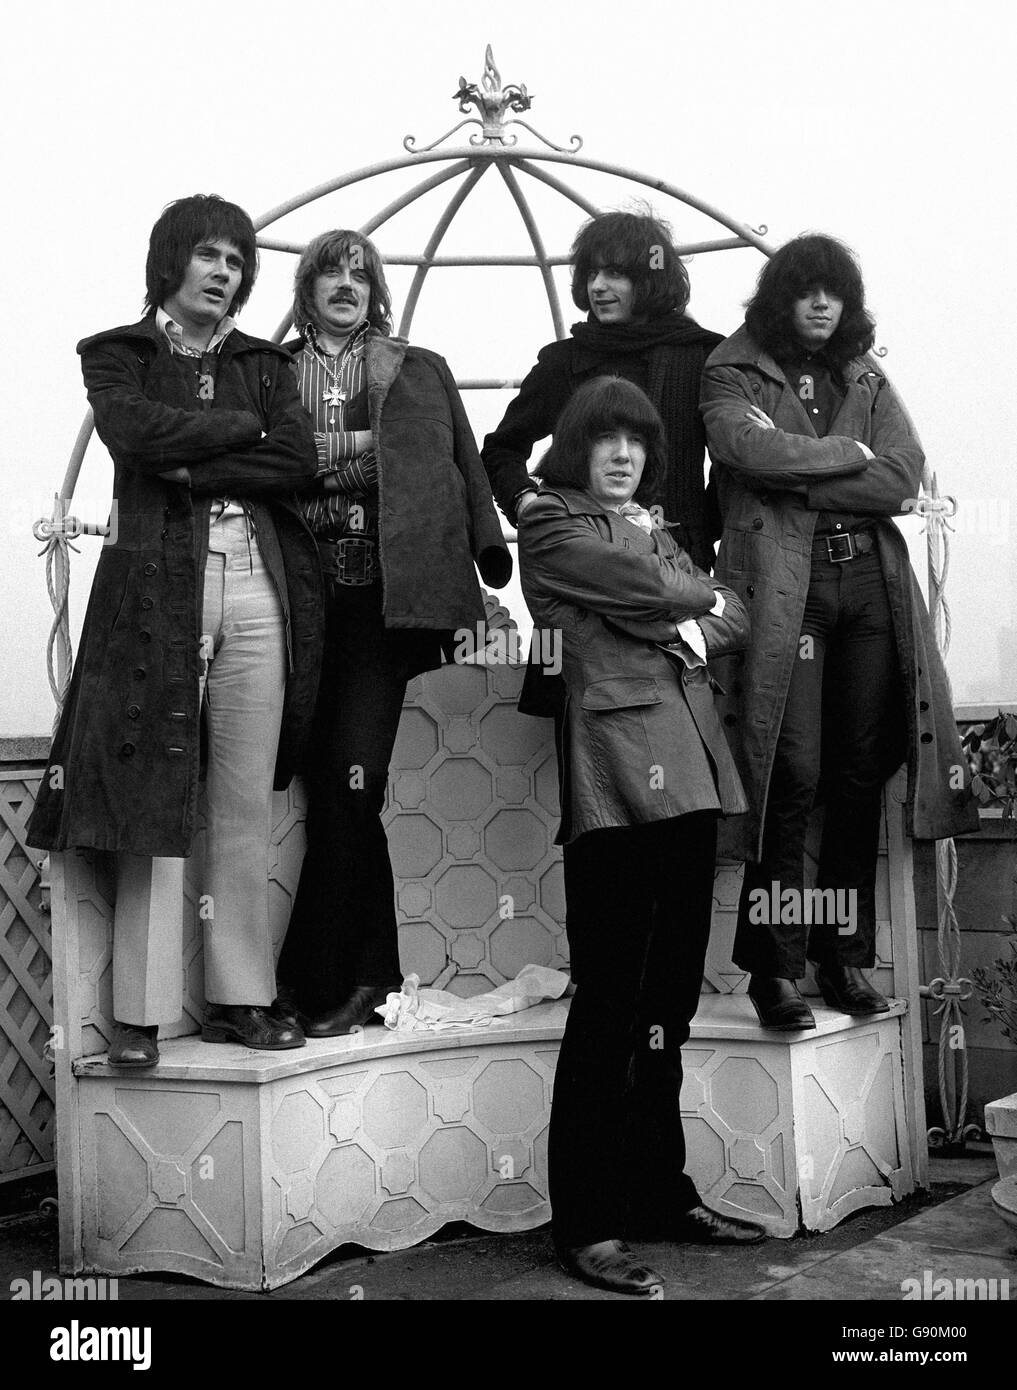 Music - Deep Purple - Dorchester Hotel, London - 1969 Stock Photo - Alamy